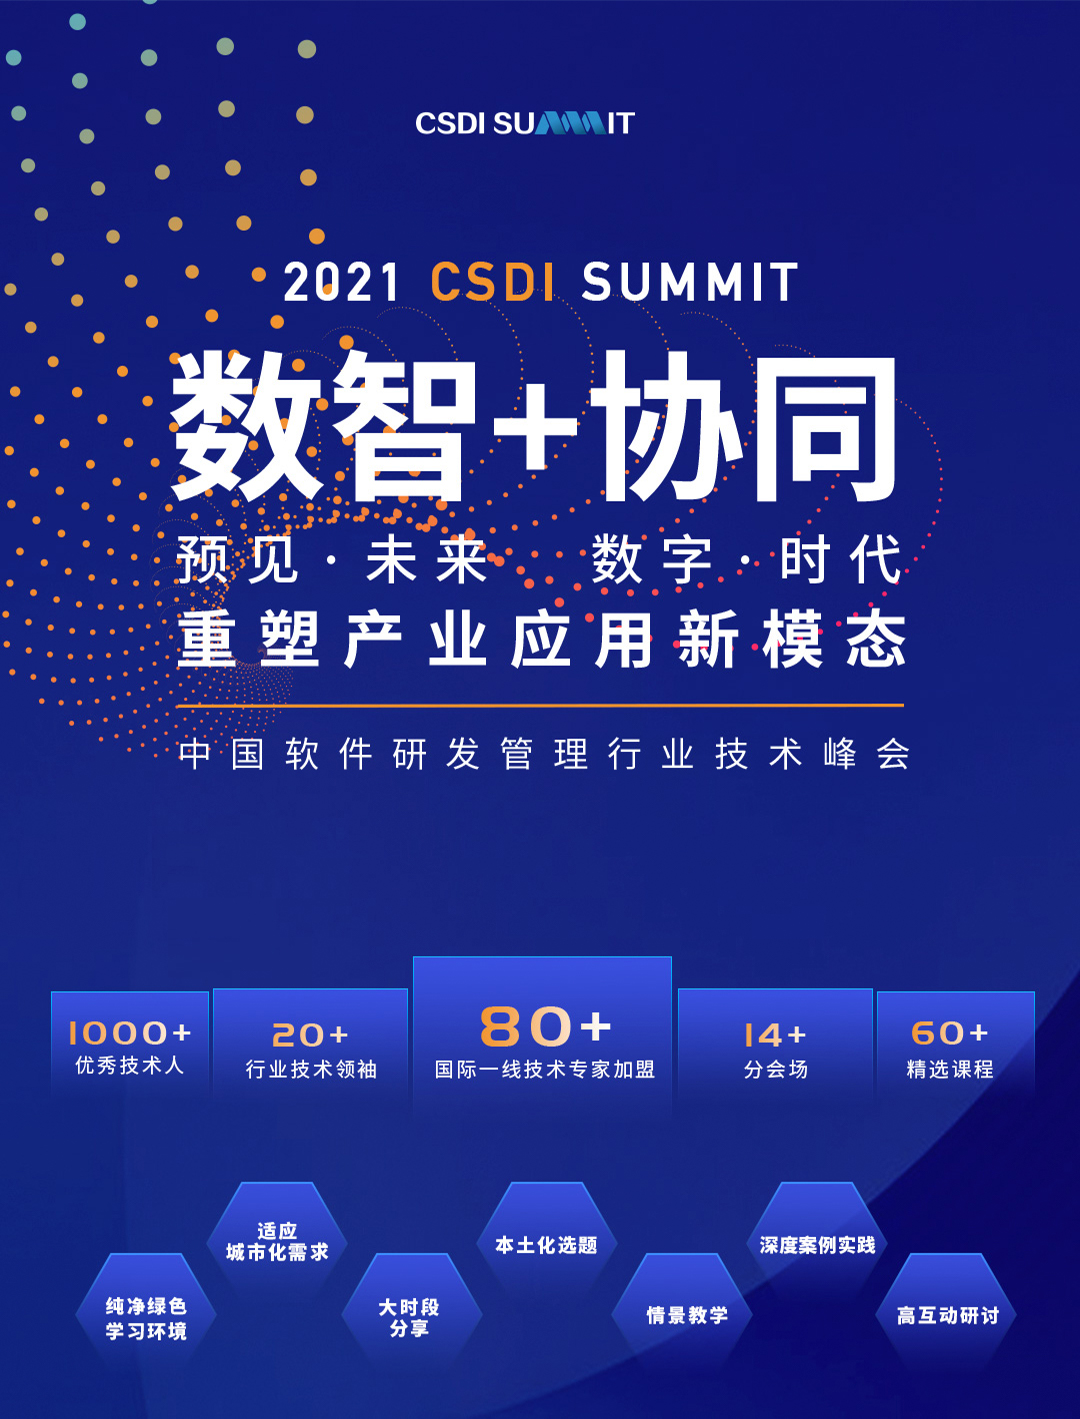 2021 CSDI SUMMIT中国软件研发管理行业技术峰会